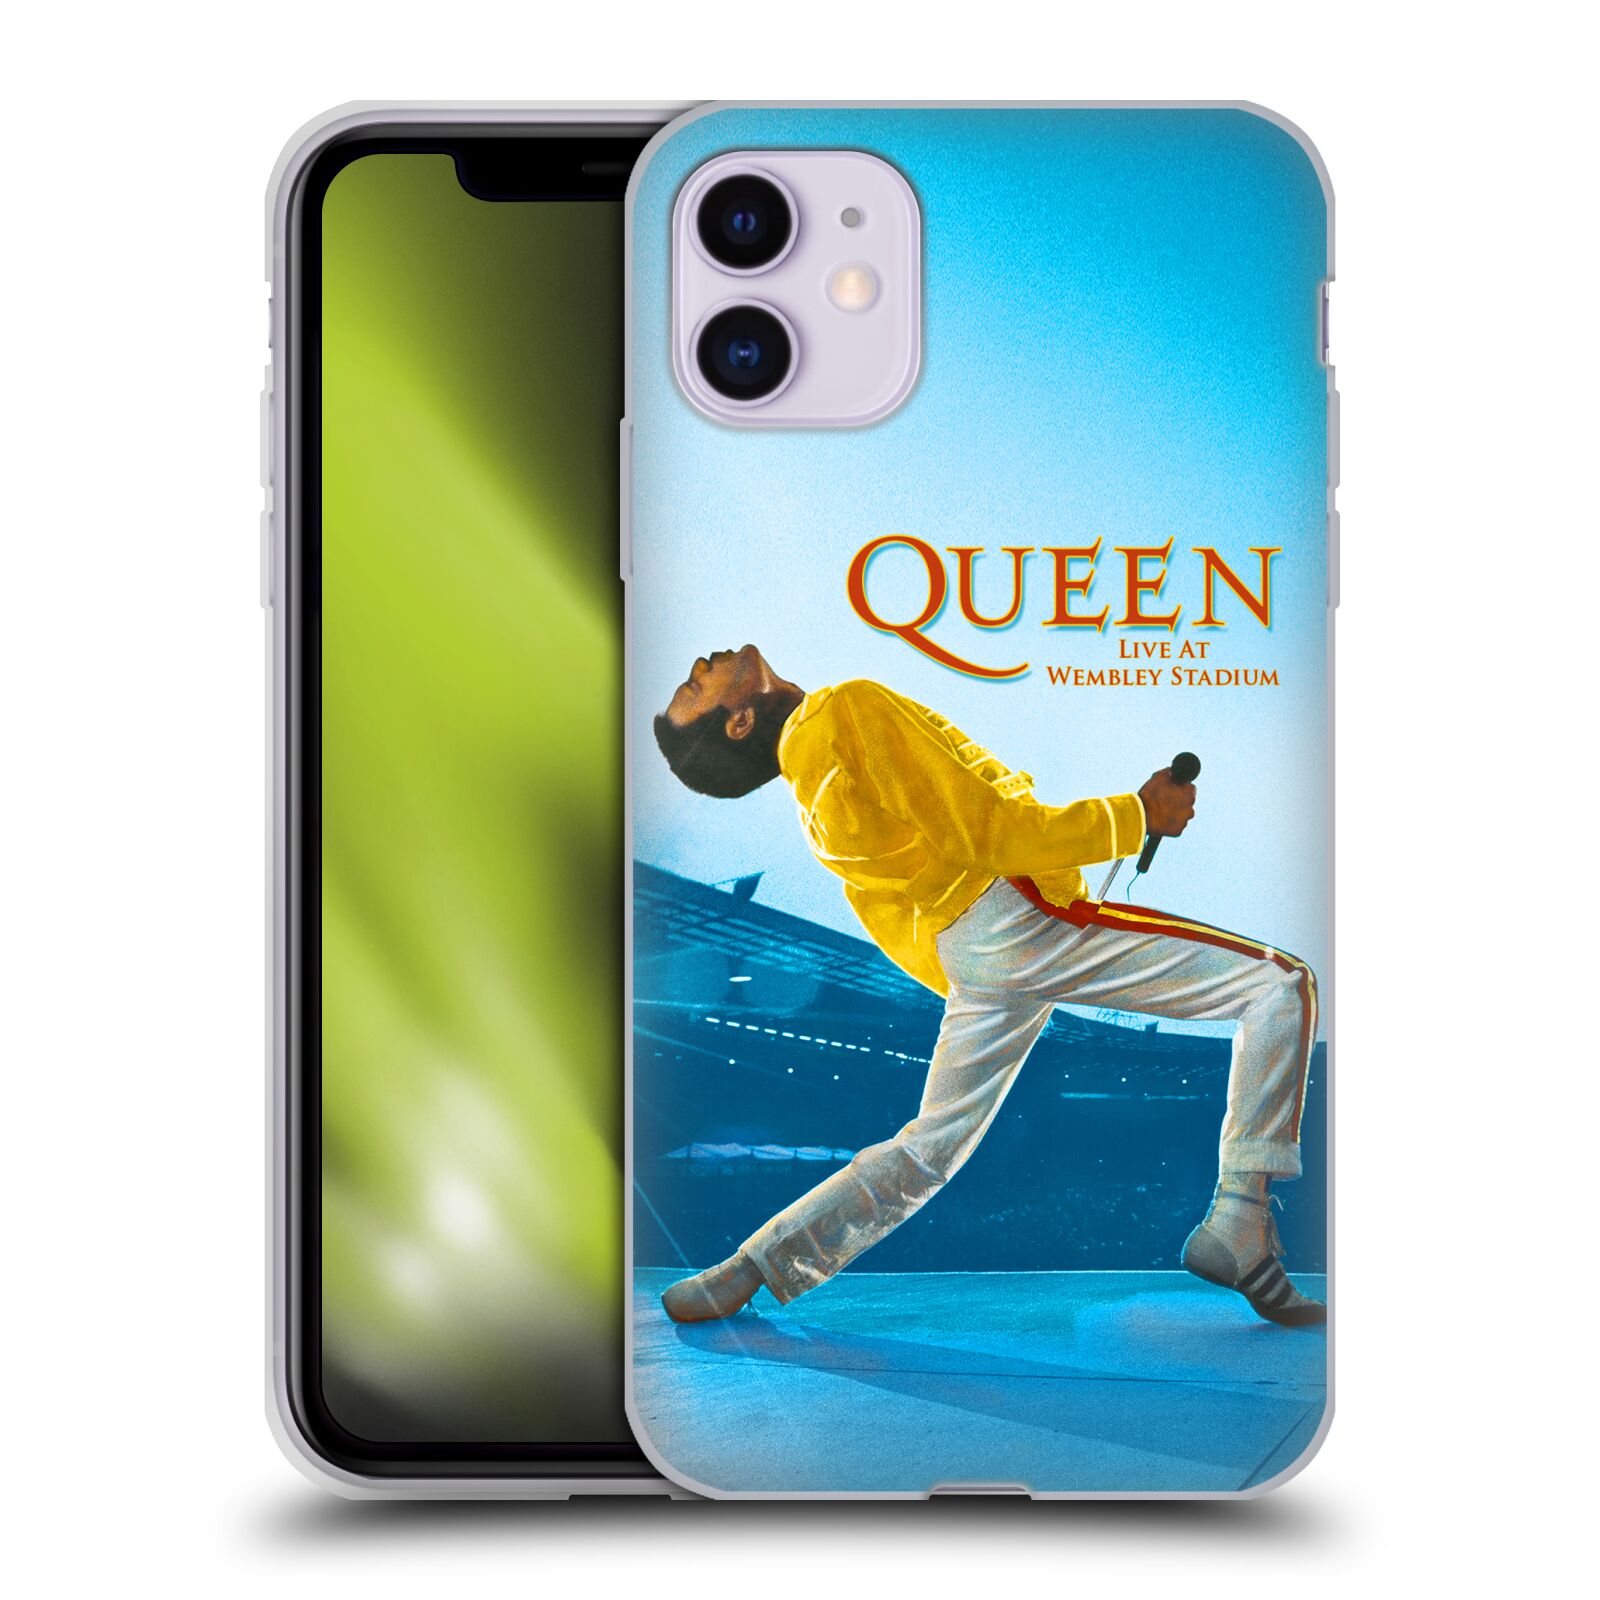 Silikonové pouzdro na mobil Apple iPhone 11 - Head Case - Queen - Freddie Mercury (Silikonový kryt, obal, pouzdro na mobilní telefon Apple iPhone 11 s displejem 6,1" s motivem Queen - Freddie Mercury)